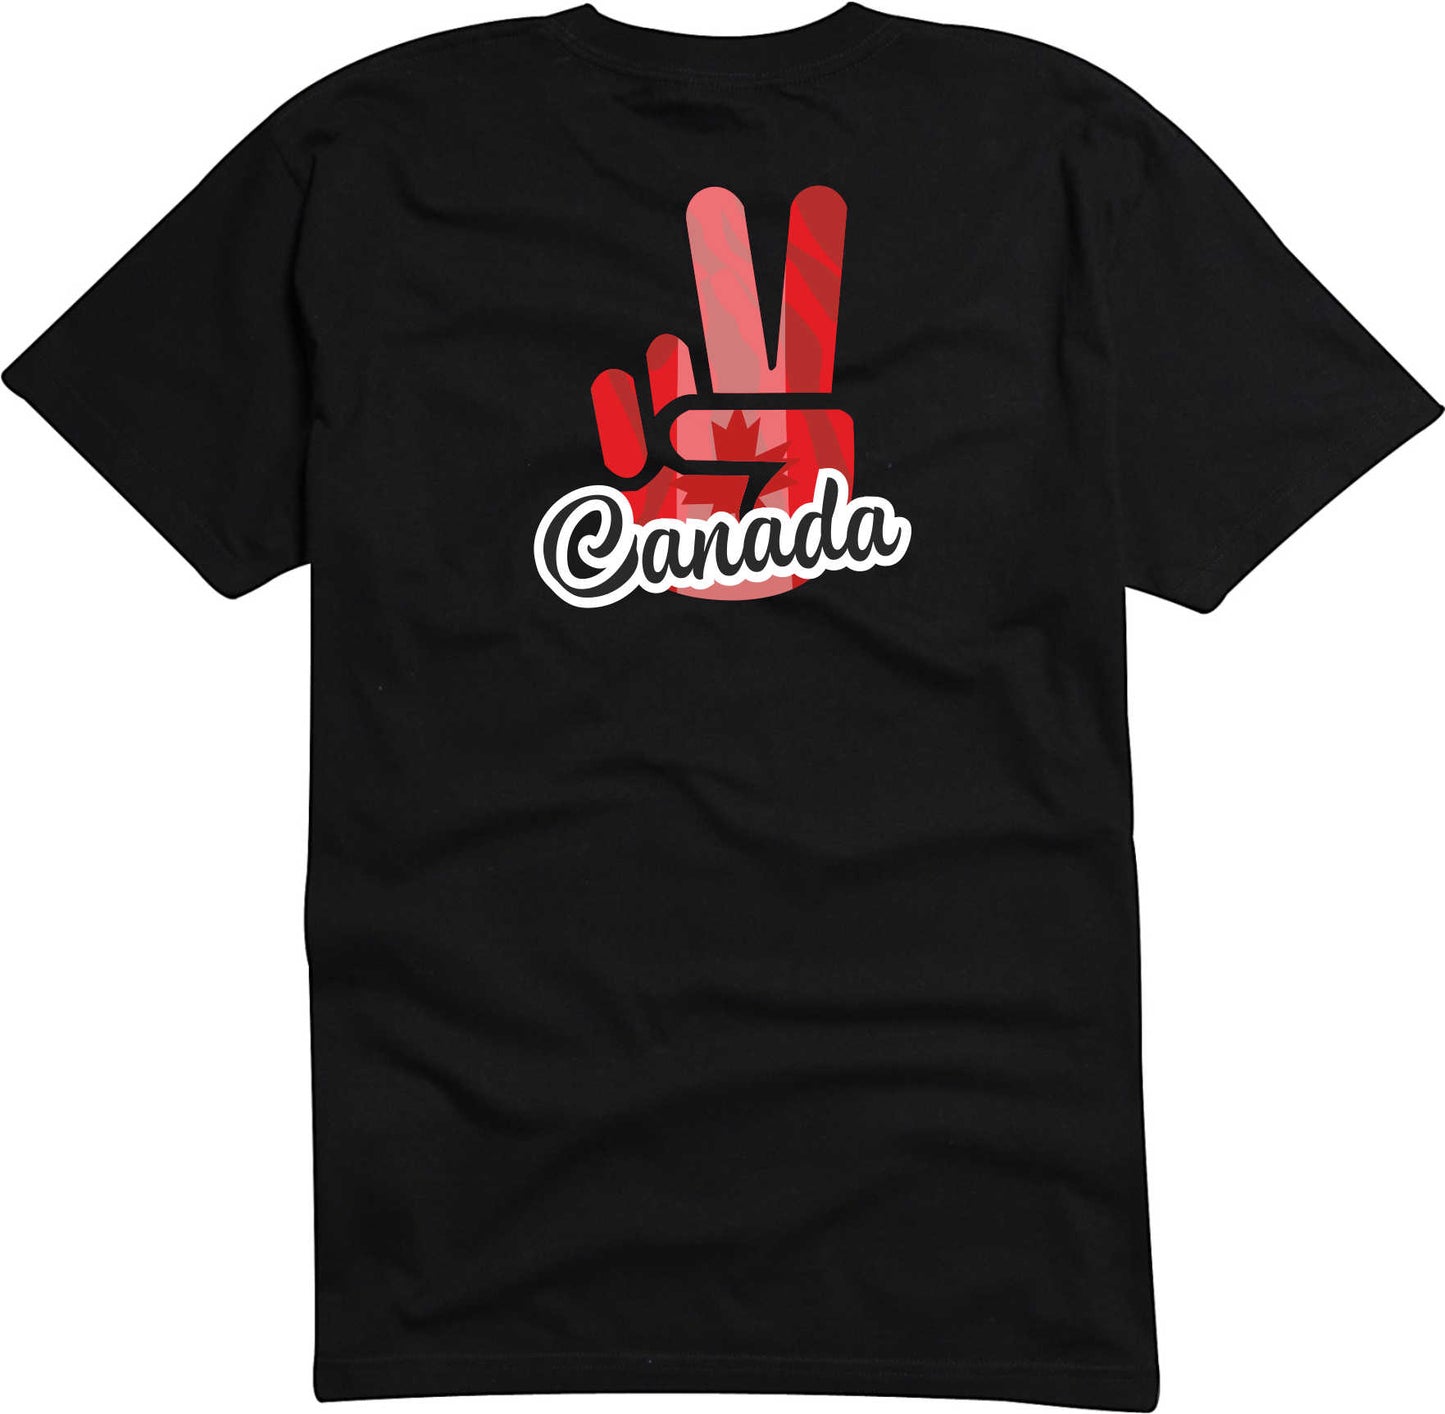 T-Shirt Herren - Victory - Flagge / Fahne - Canada - Sieg